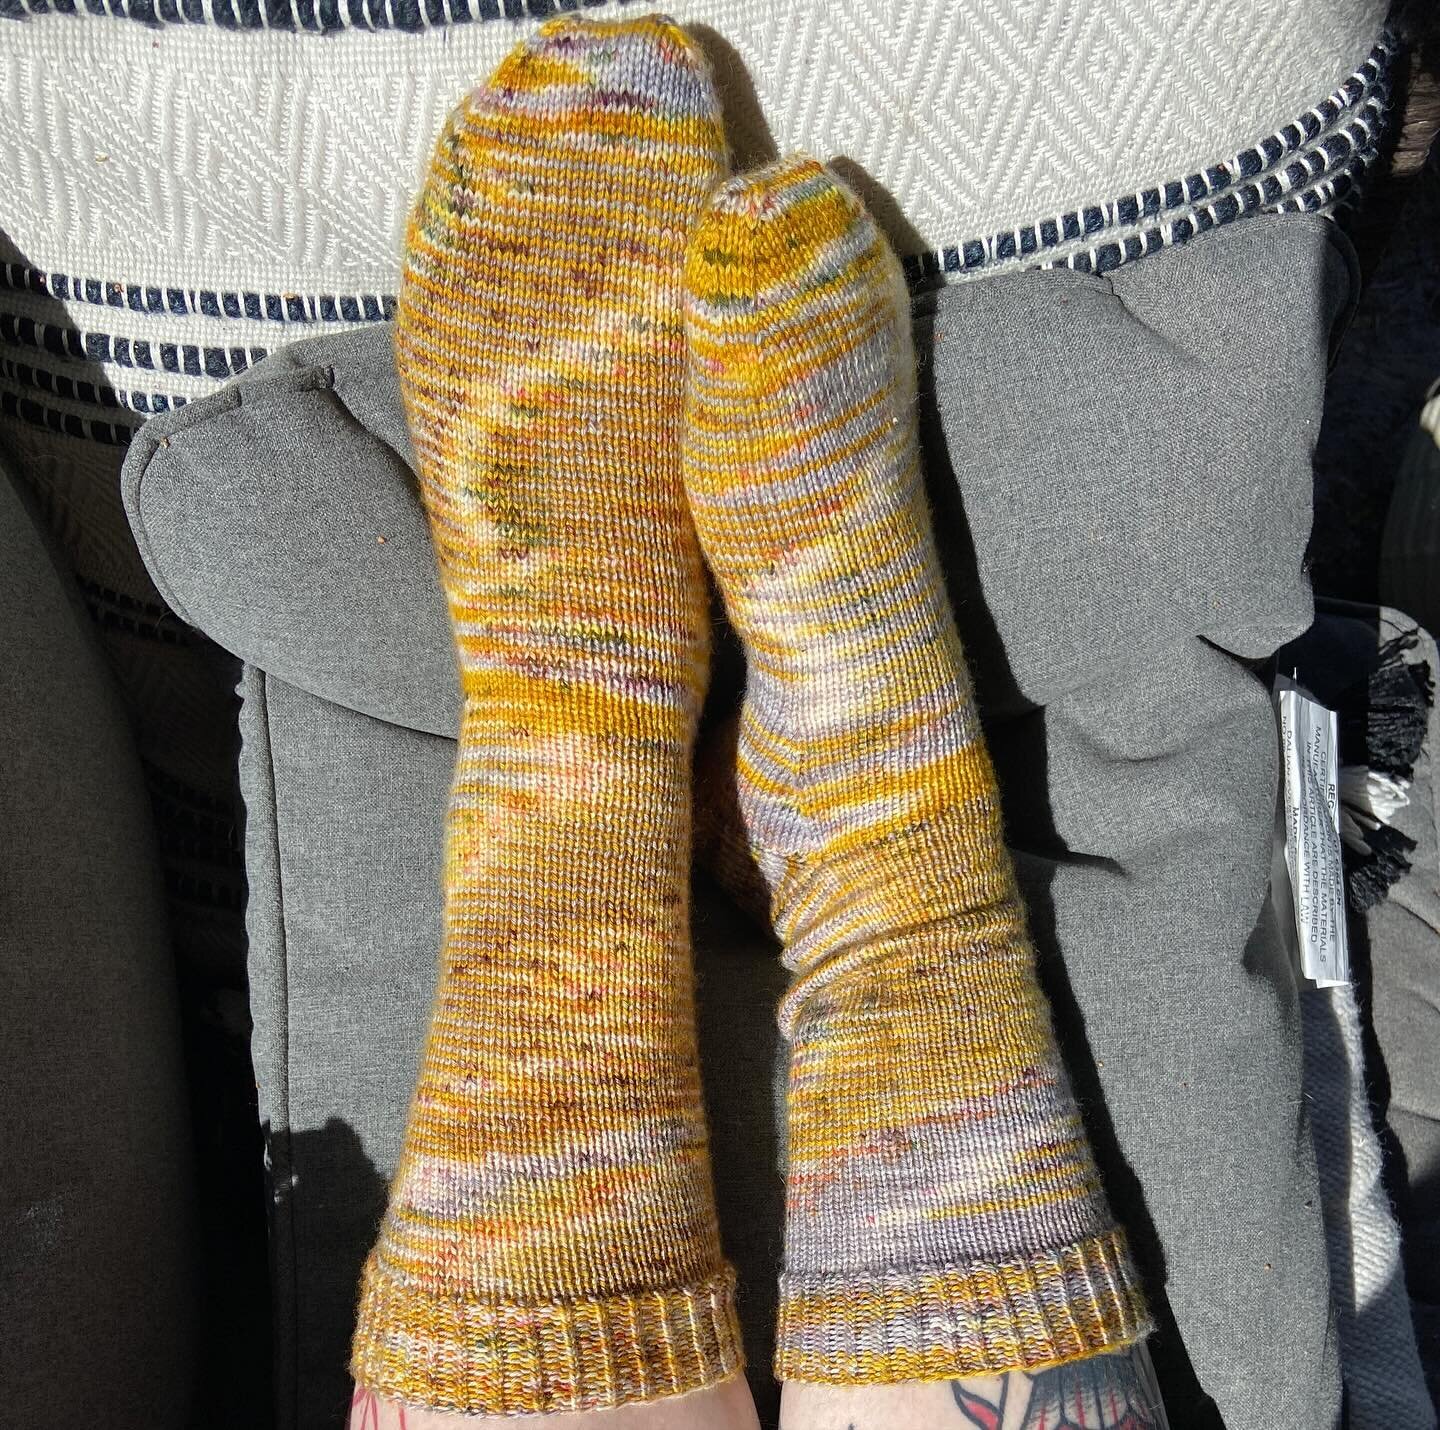 🌞
@hedgehogfibres 
#sockknitting